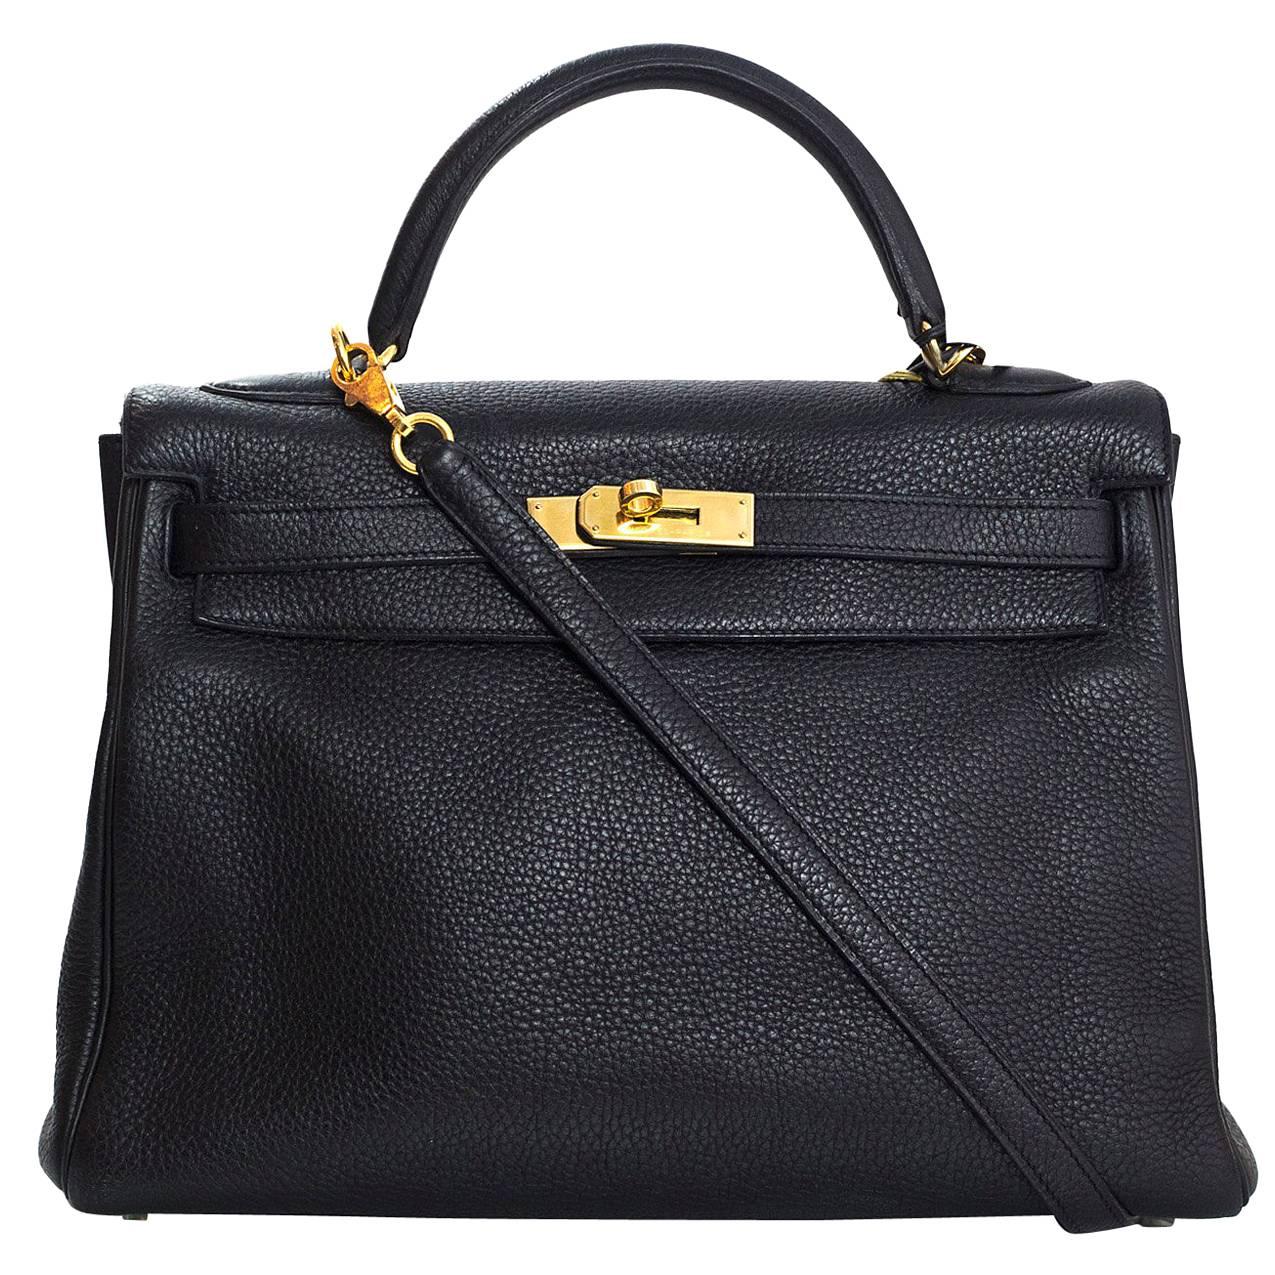 Hermes Black Togo Leather 32cm Retourne Kelly Bag w/ Box